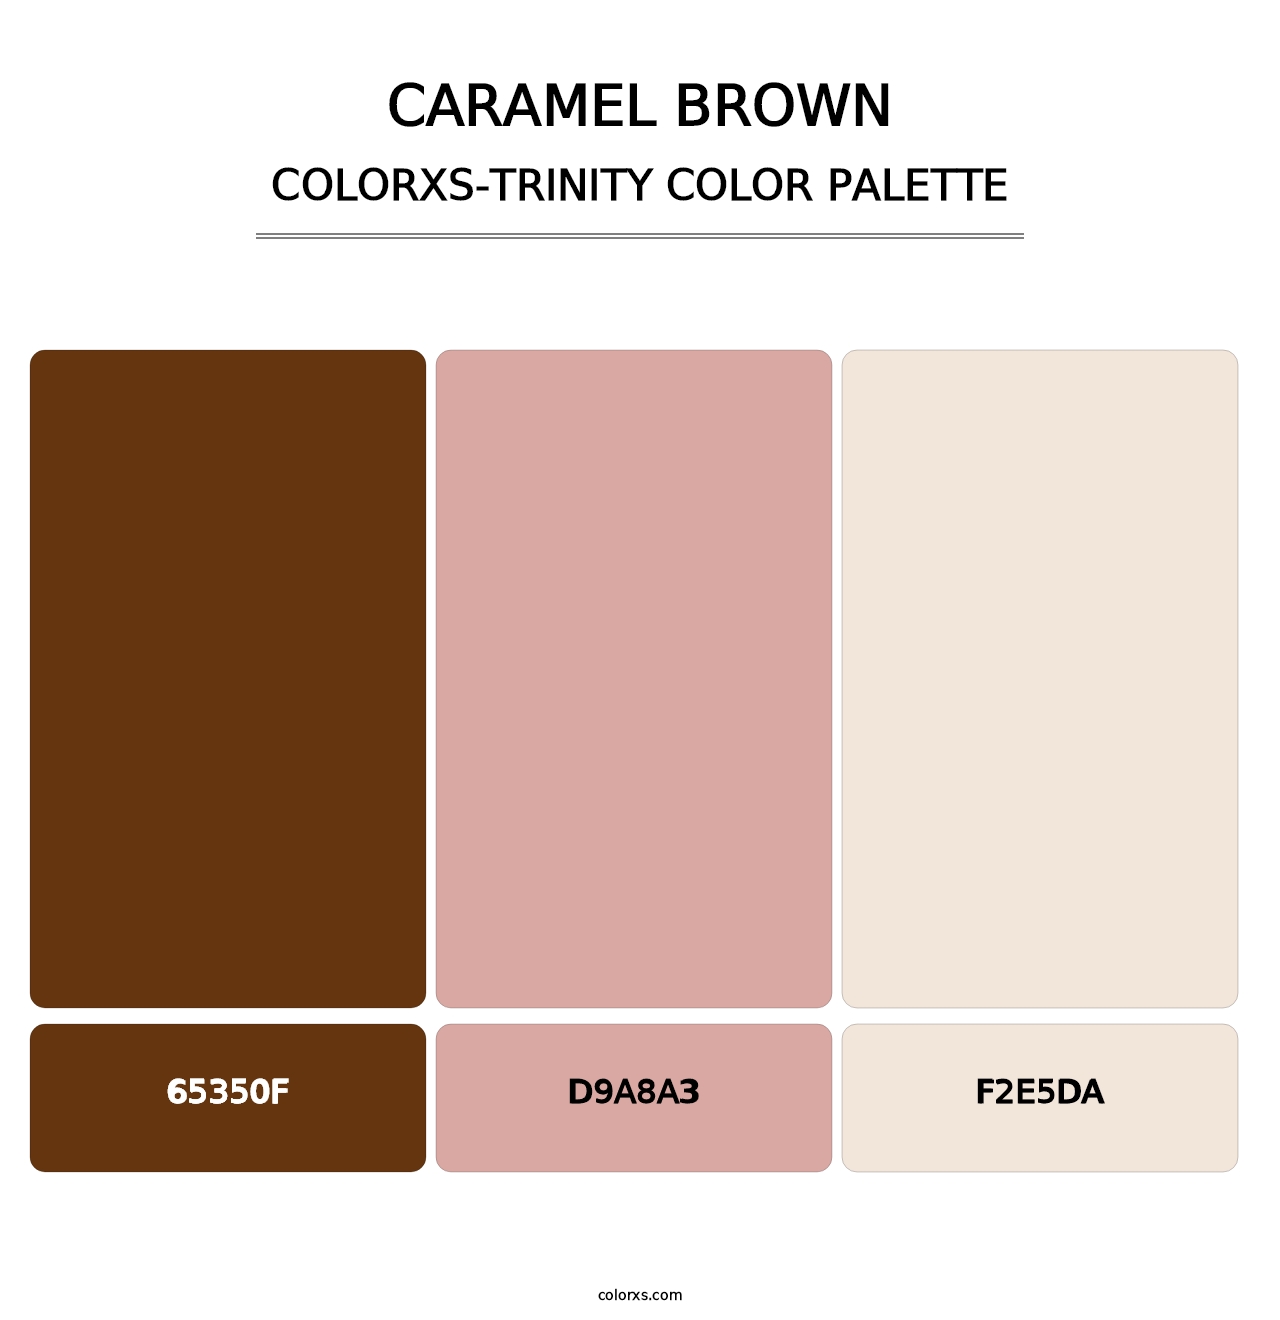 Caramel Brown - Colorxs Trinity Palette